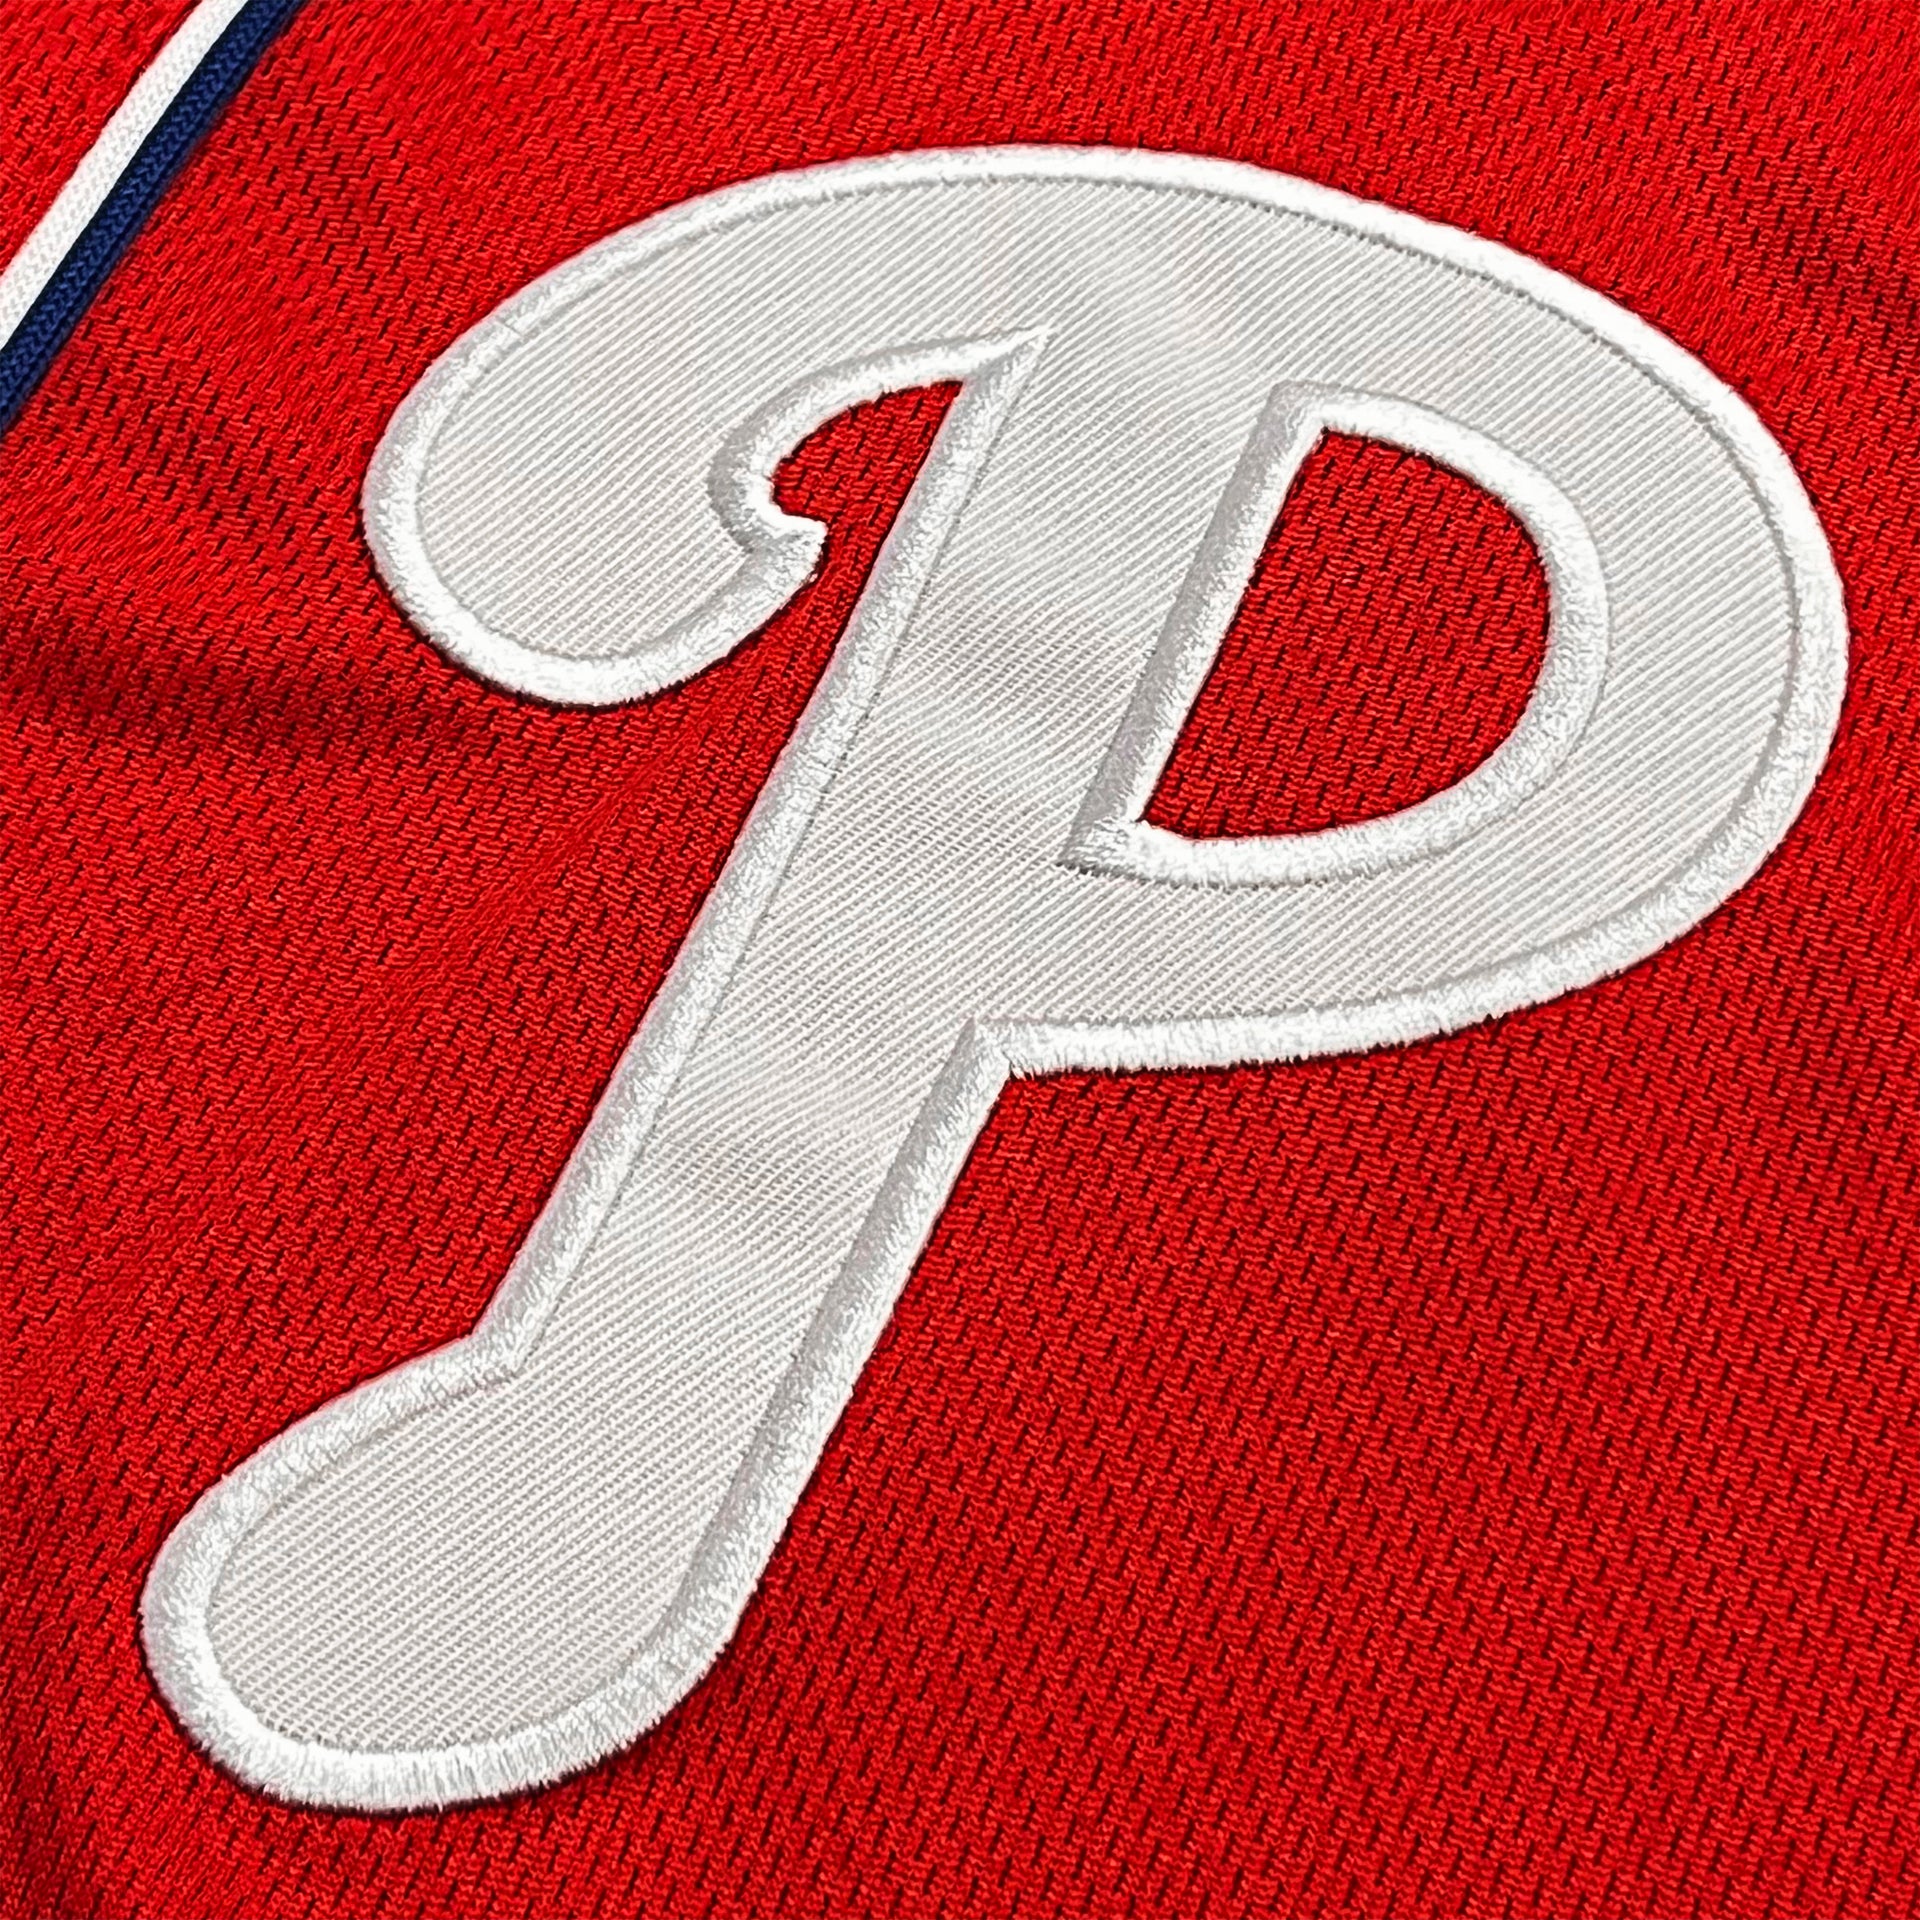 phillies red alternate jersey